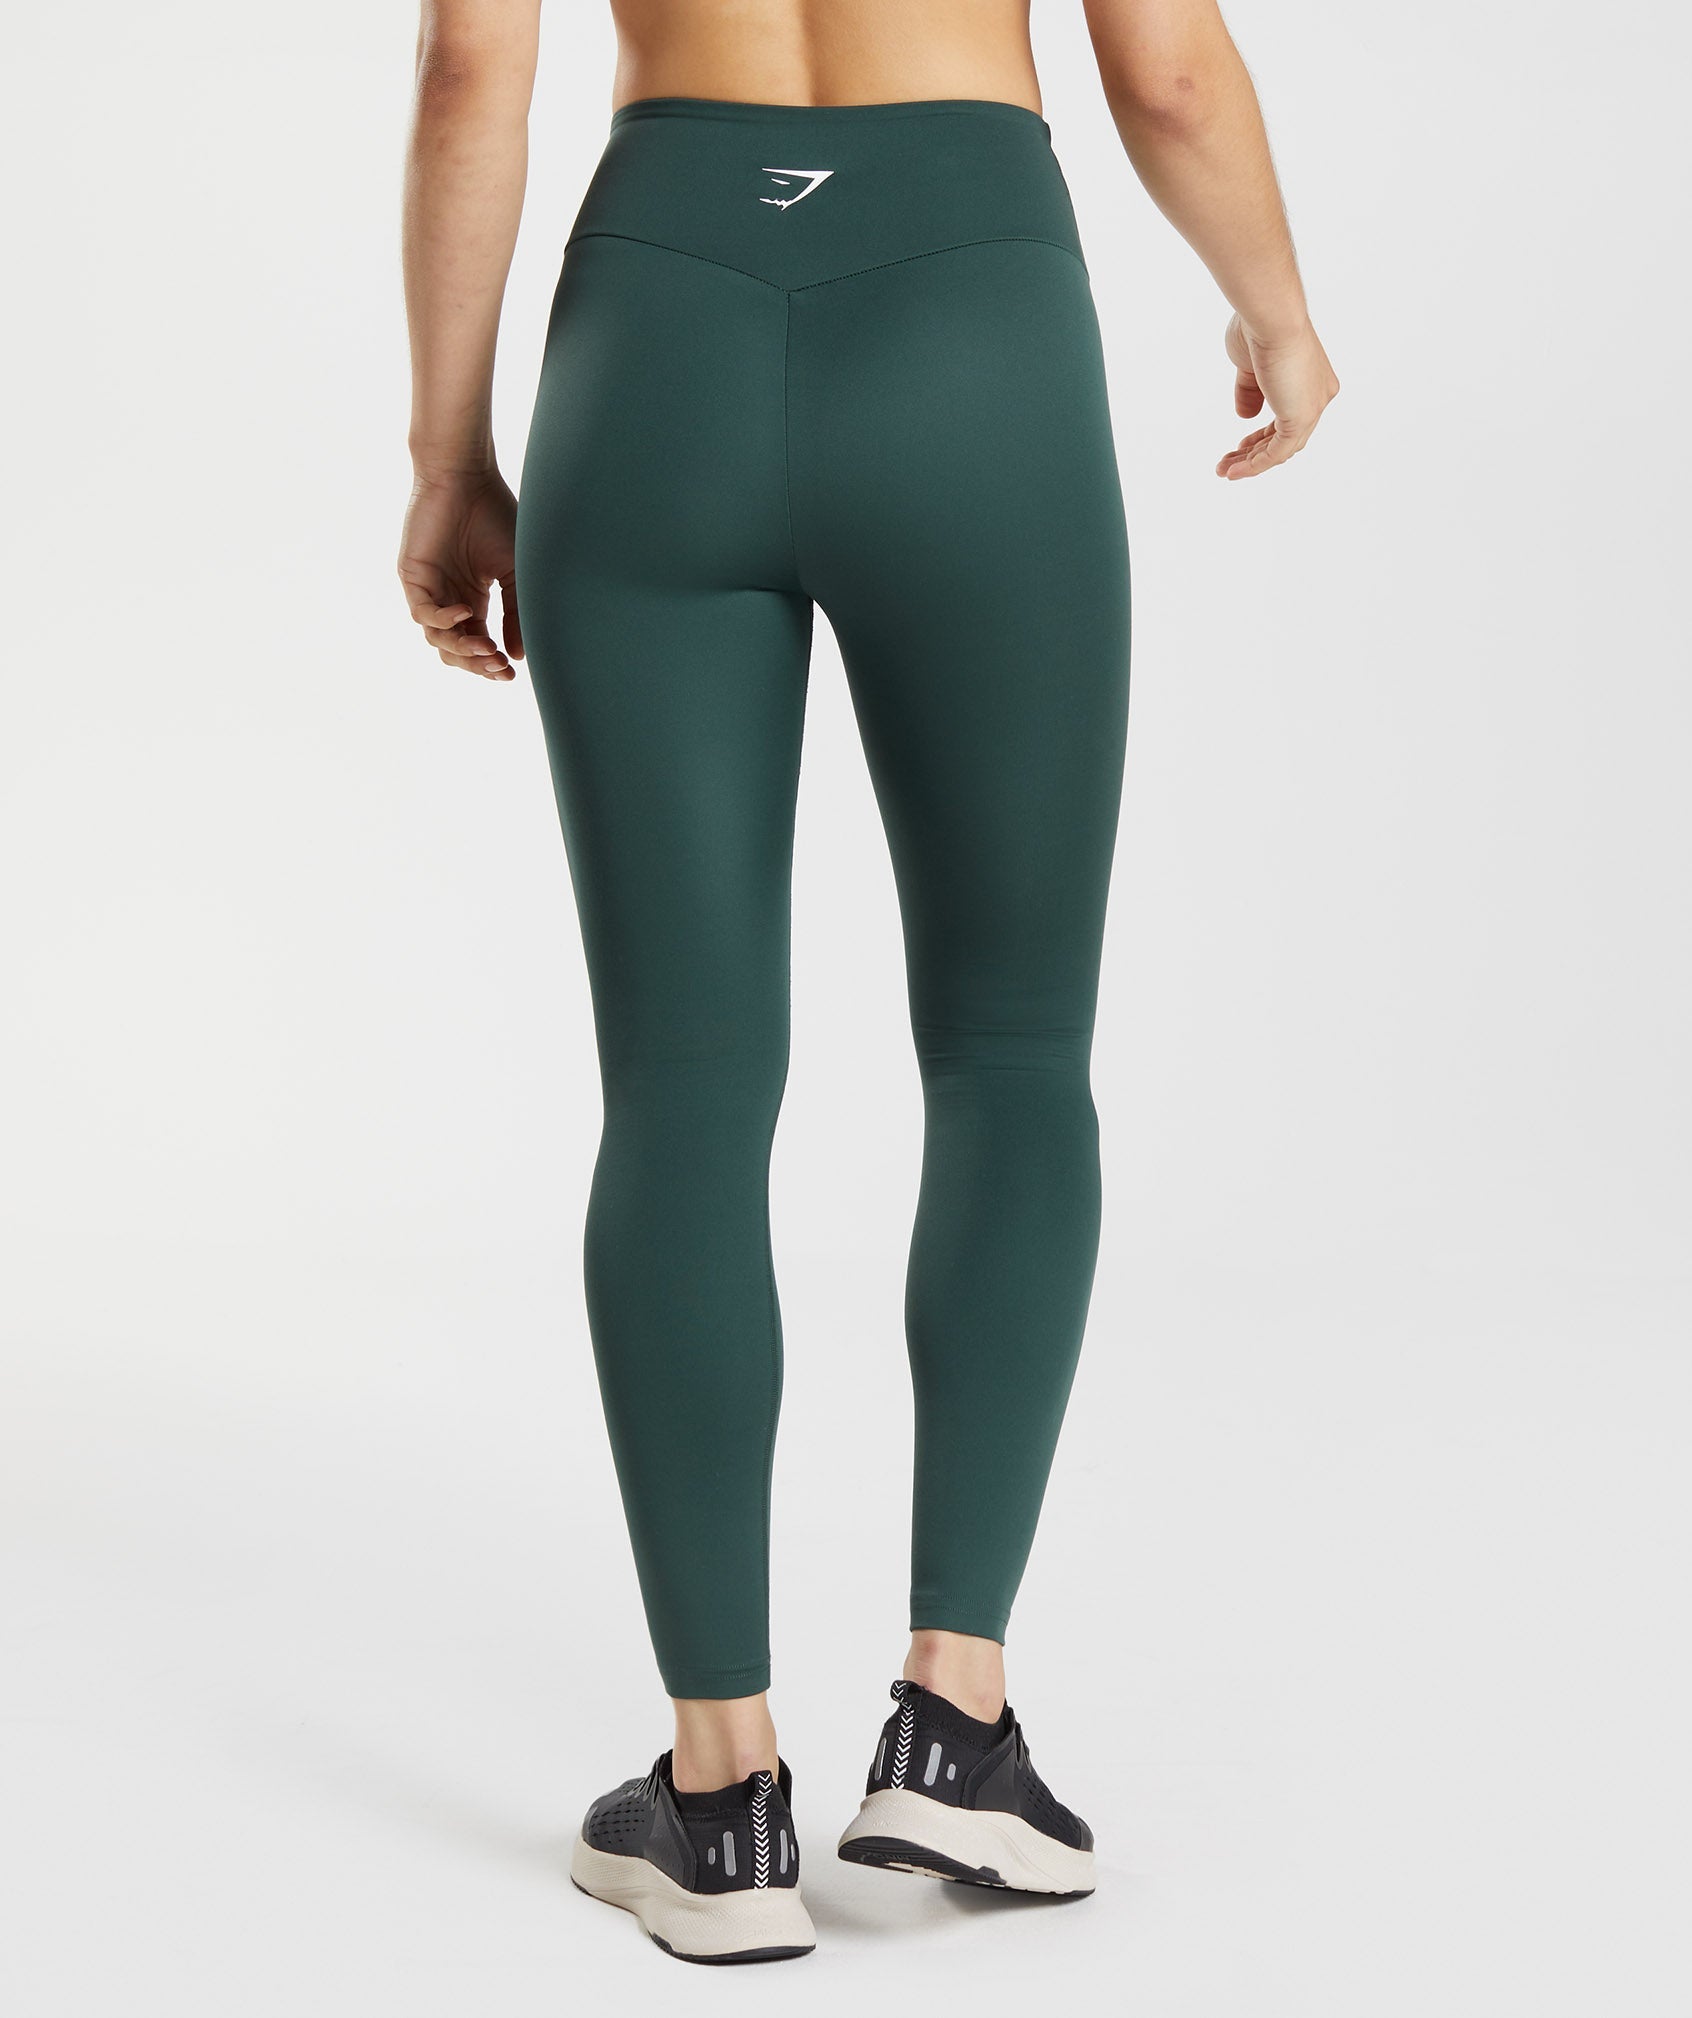 Gymshark Flex High Waist Leggings Charcoal Marled Green Women's